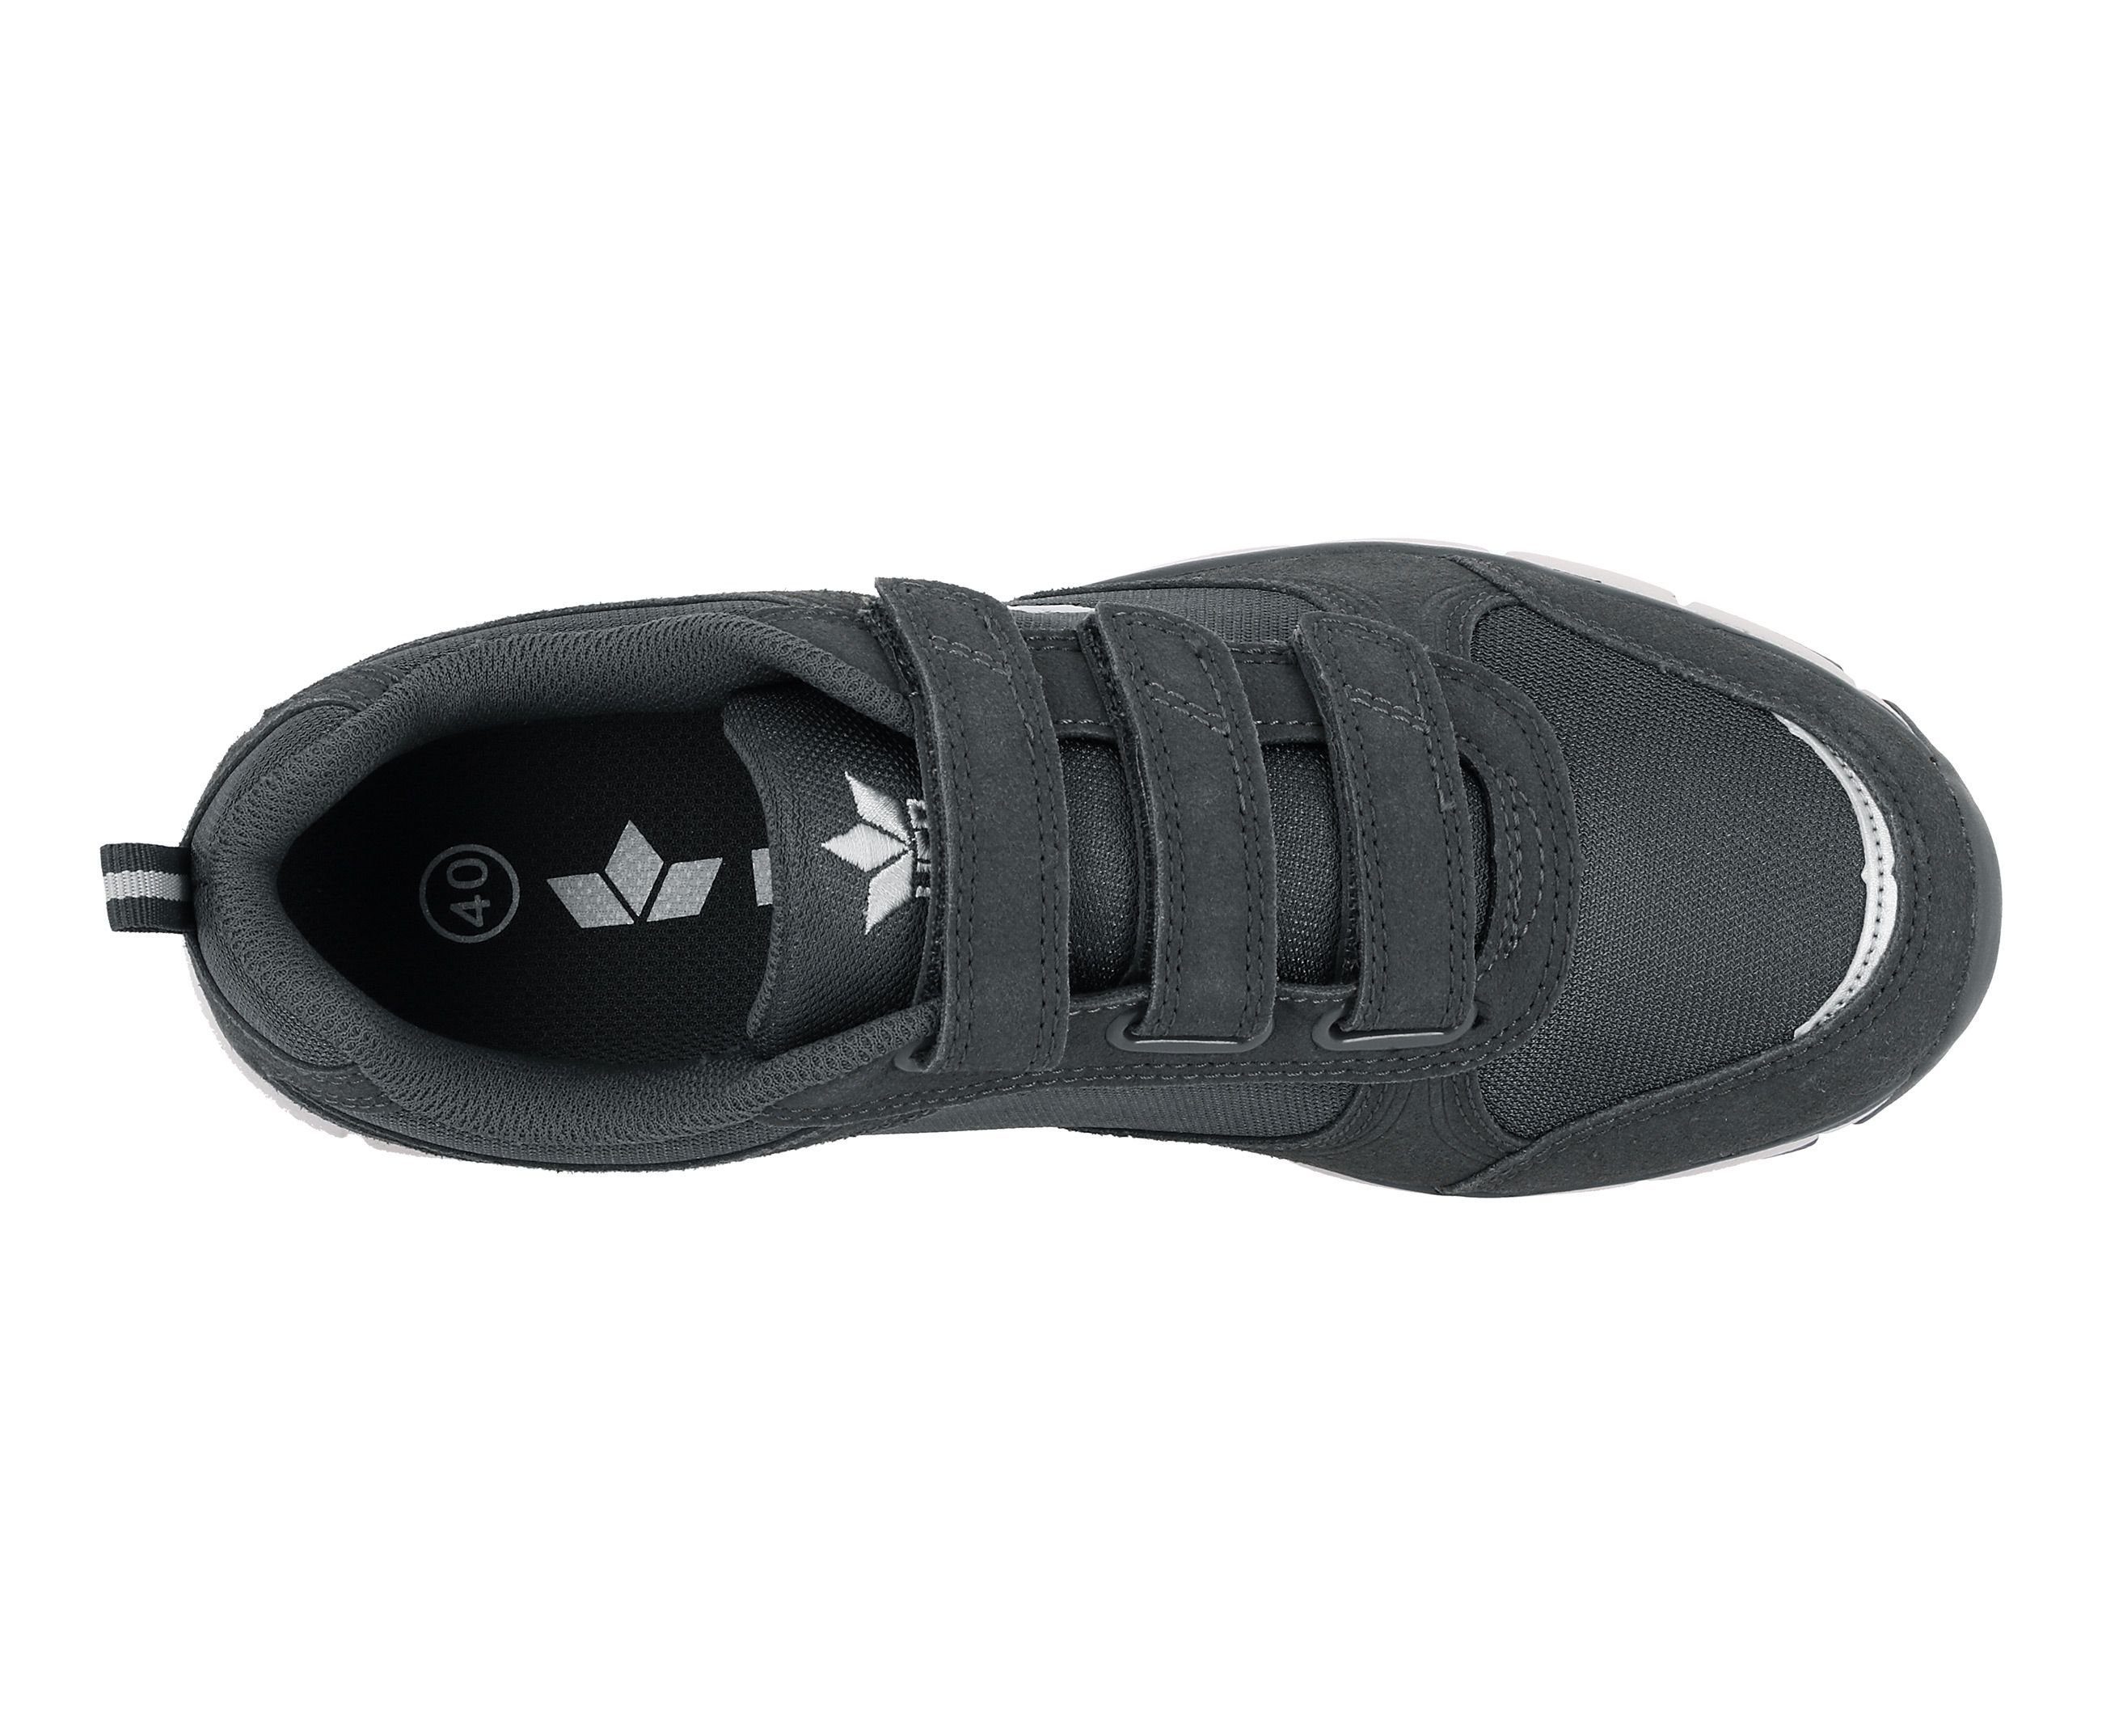 Schoenen Sneakers Klittenband Sportschoenen H&M Klittenband Sportschoenen zwart casual uitstraling 